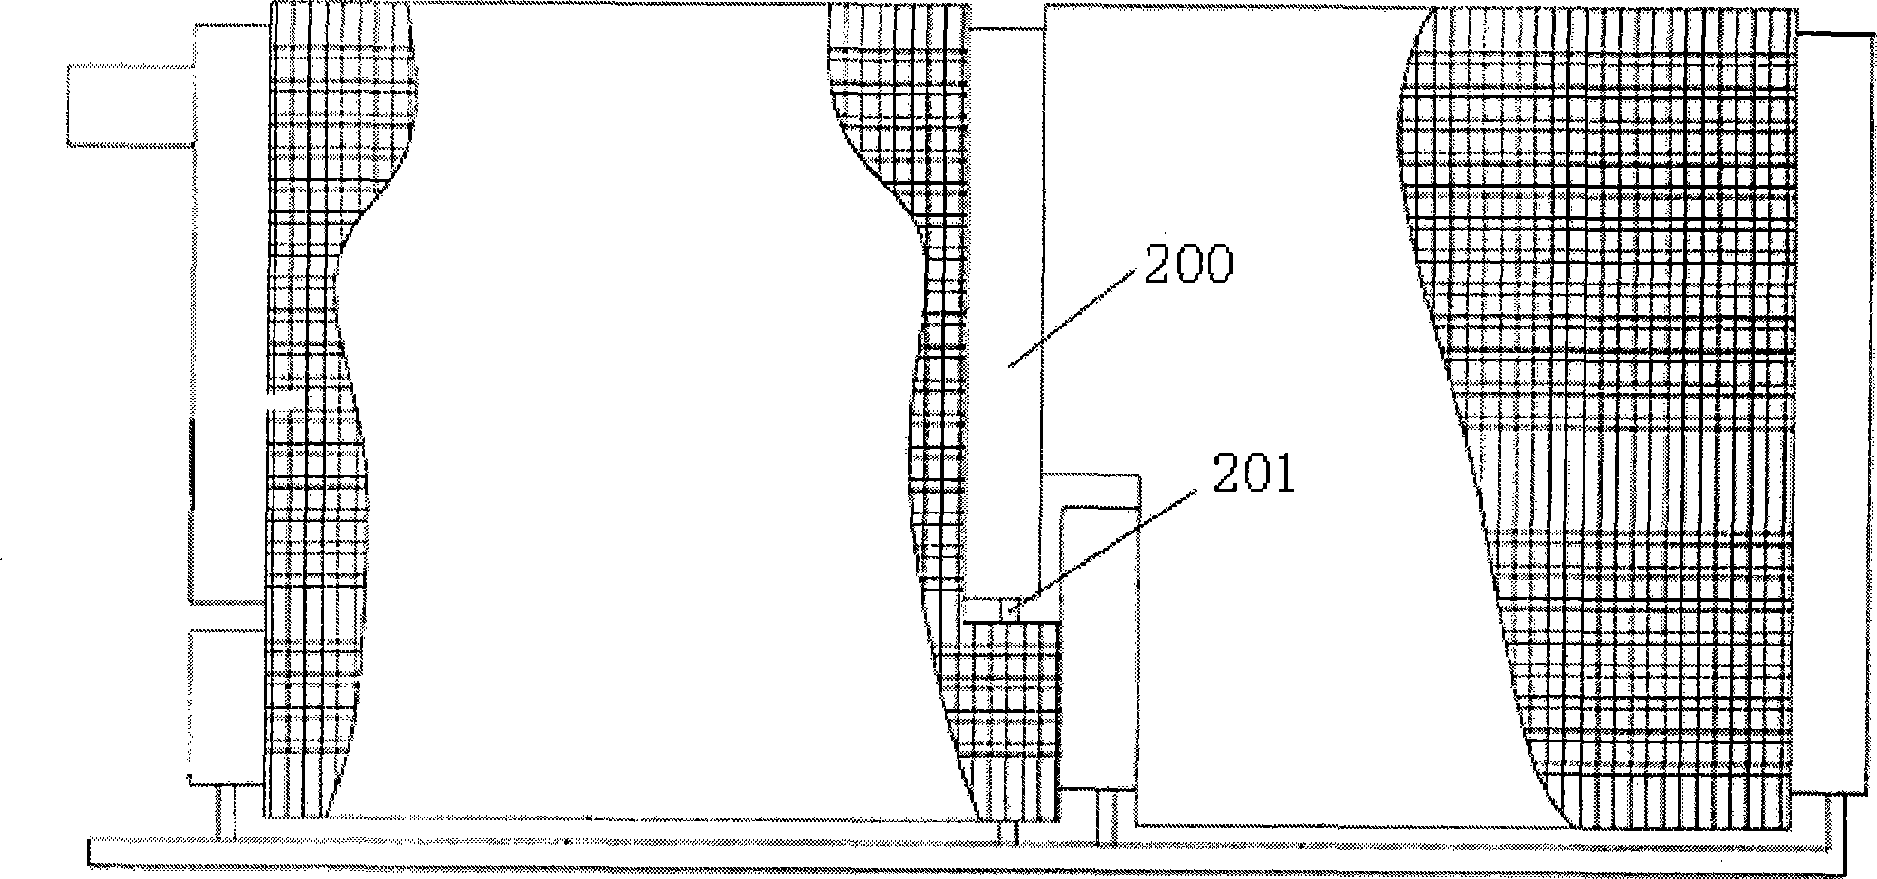 Vapor-liquid separation method for horizontal condenser and condenser